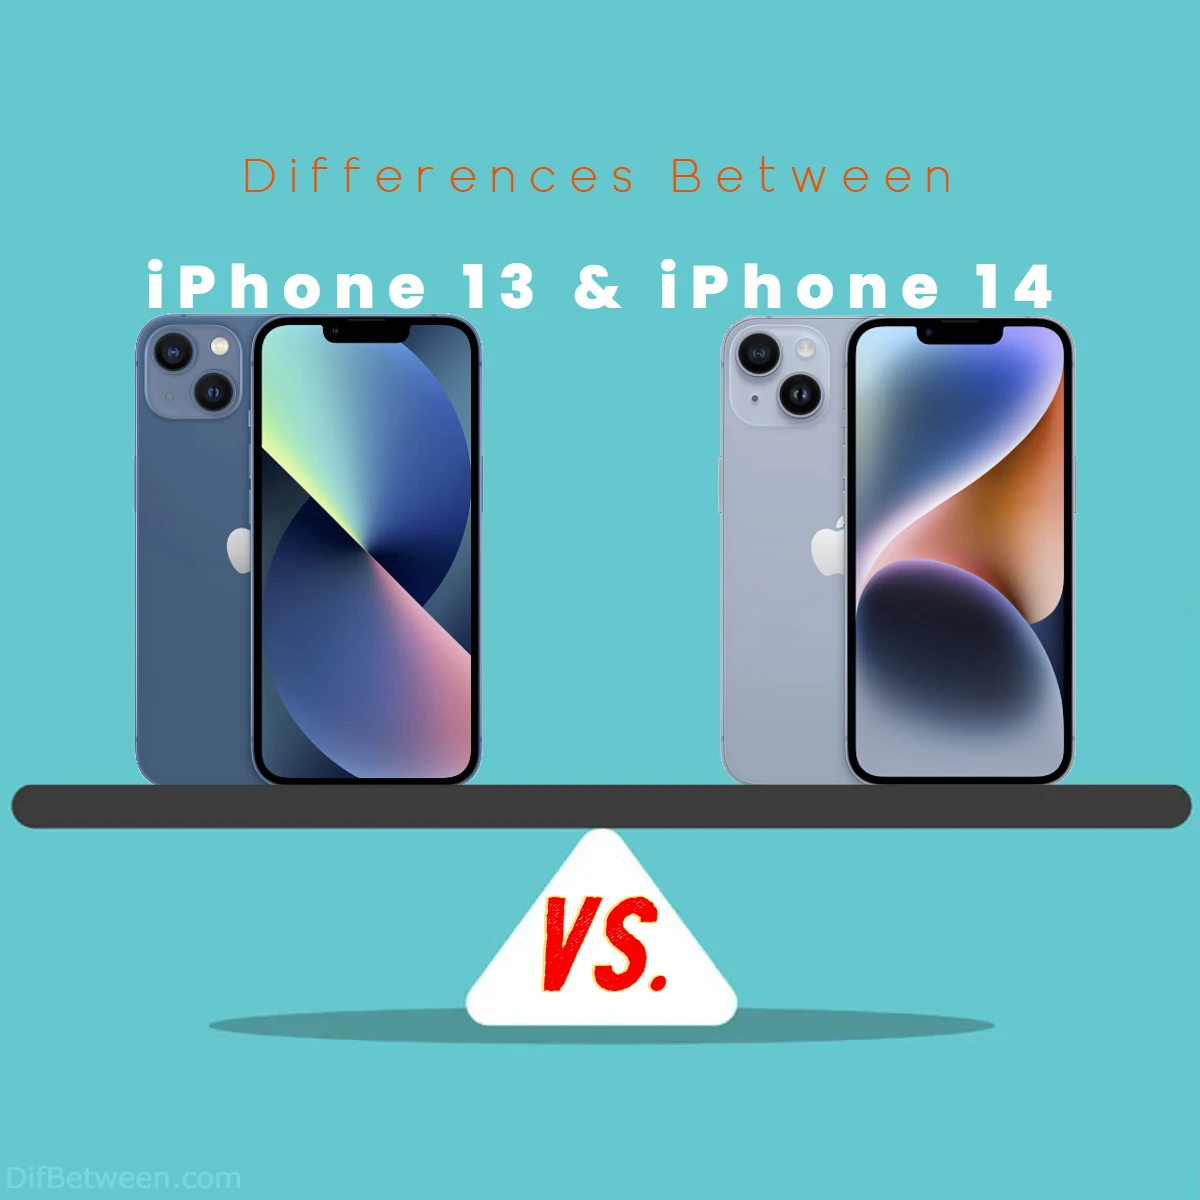 iPhone 14 vs iPhone 13